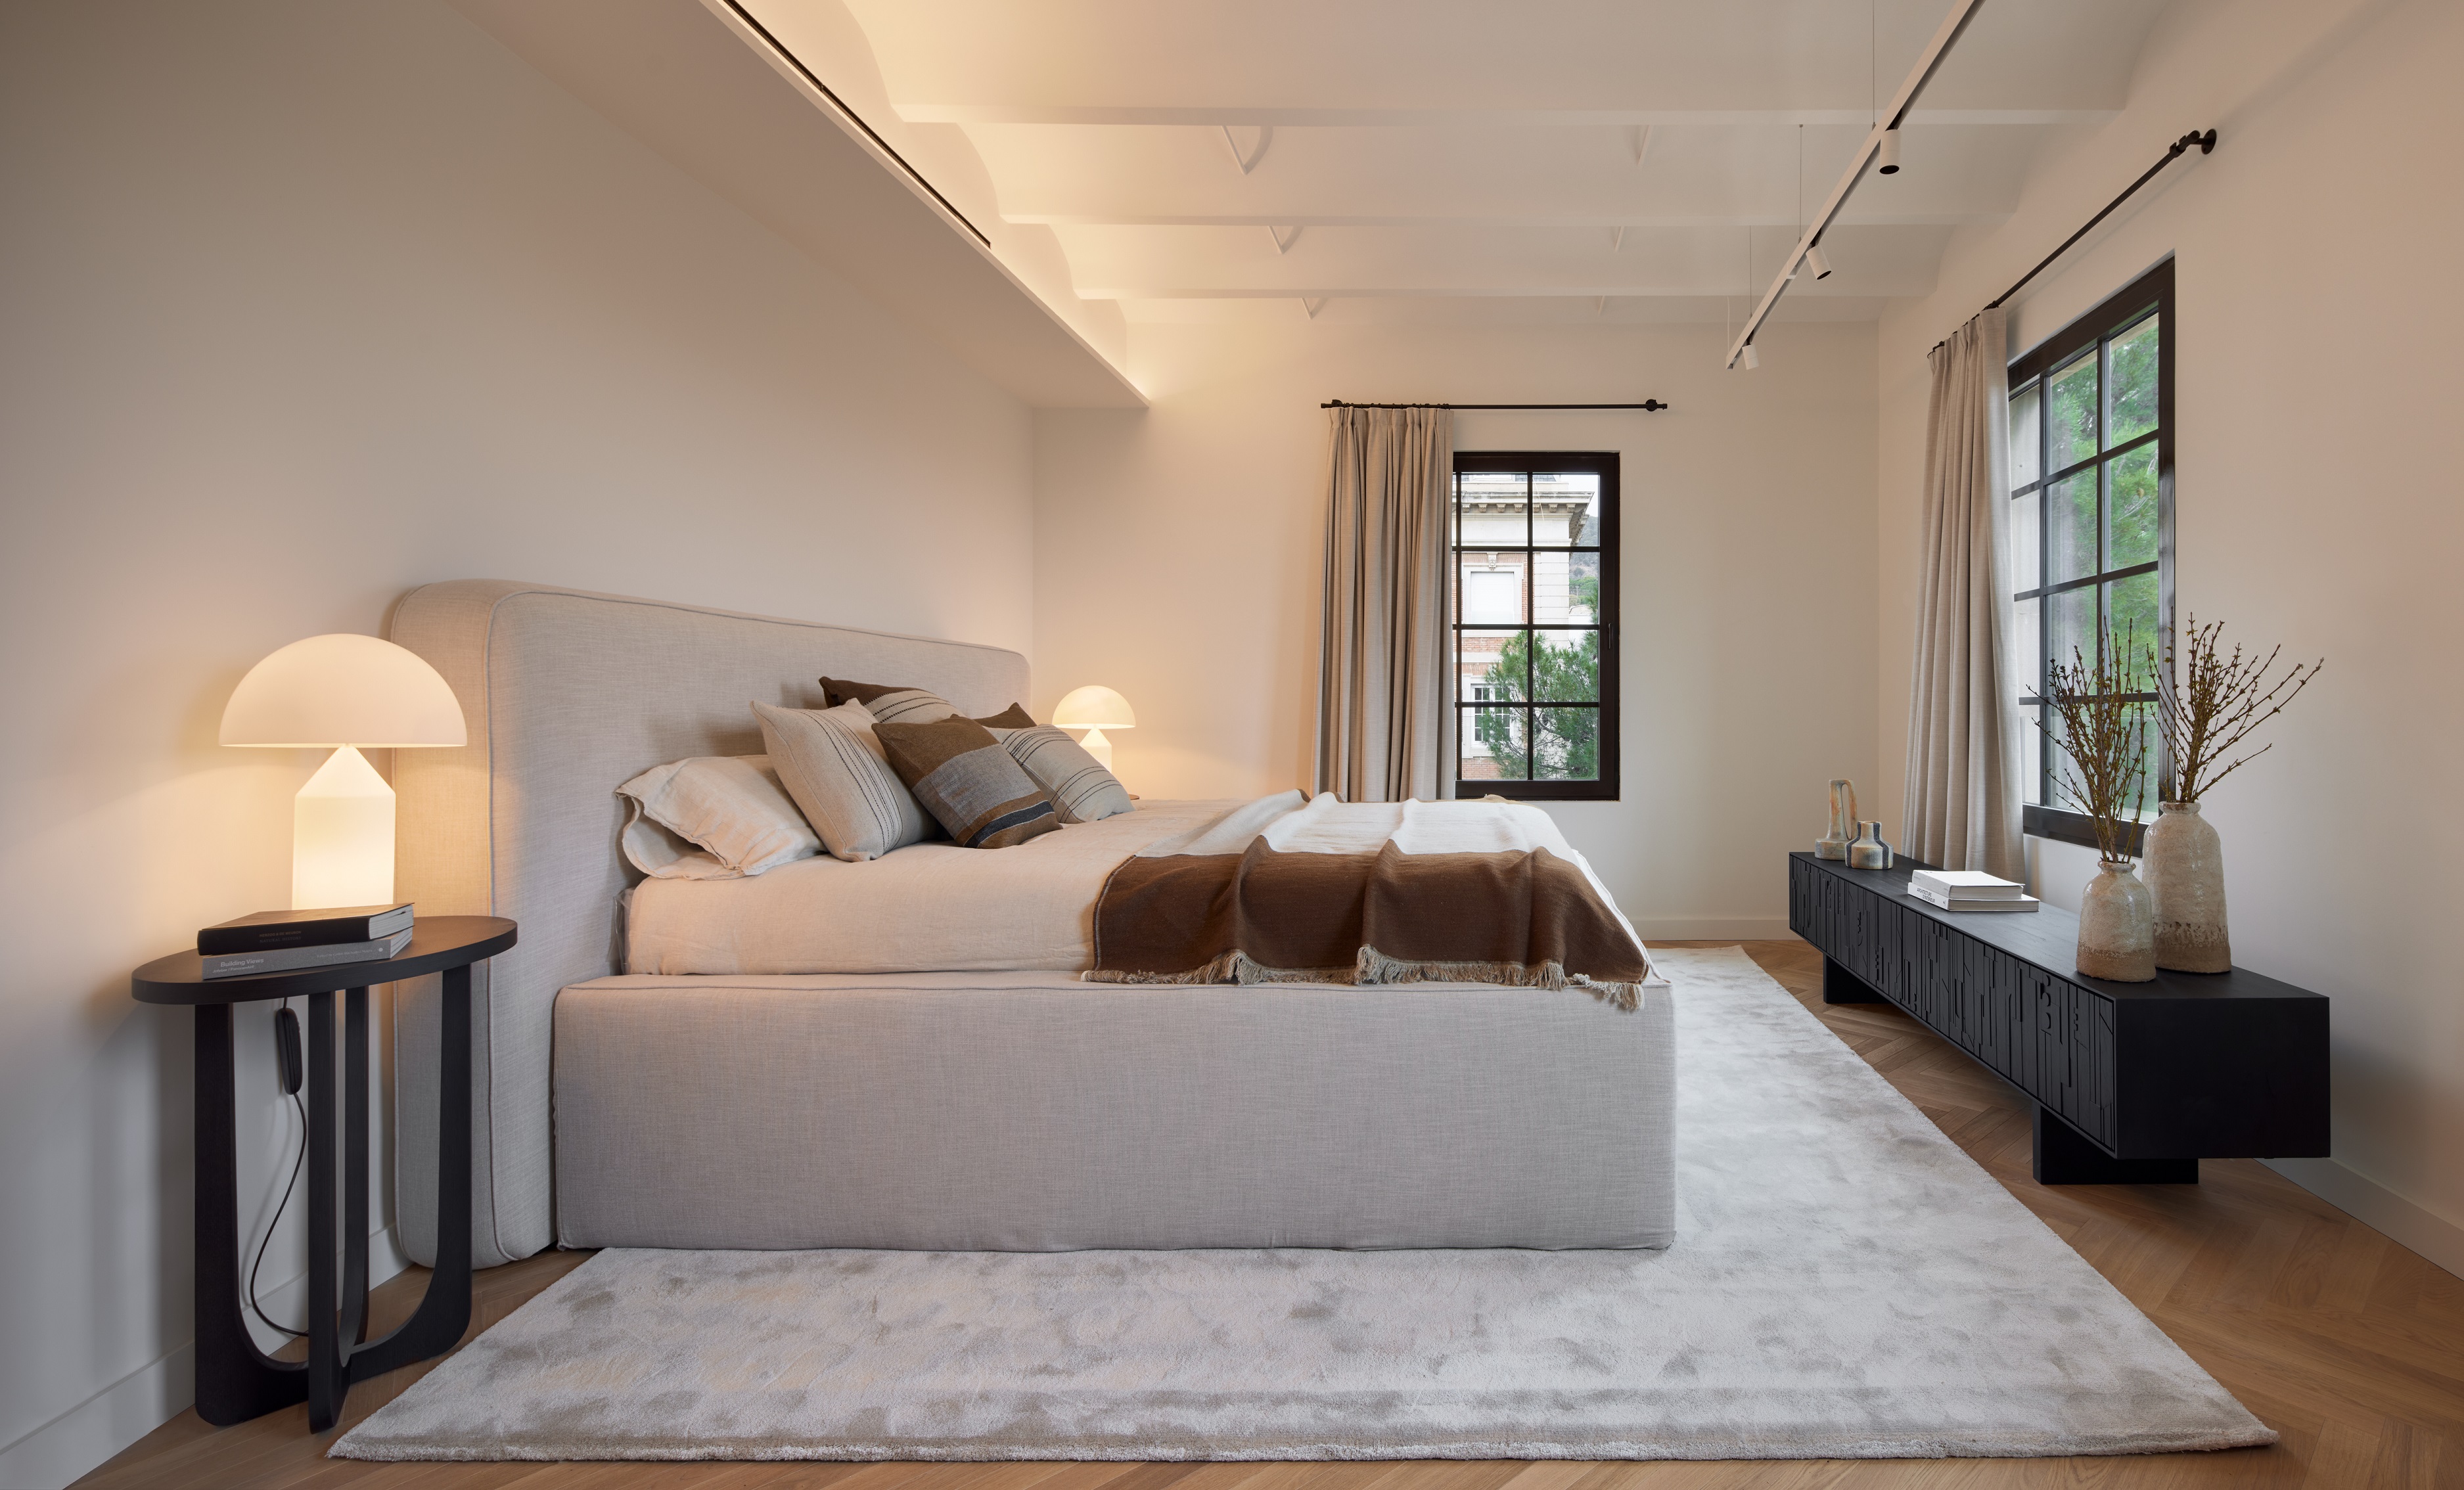 Pedralbes AV. Penthouse LUV Studio Master Bedroom 1 - LUV Studio - Arquitectura y diseño - Barcelona